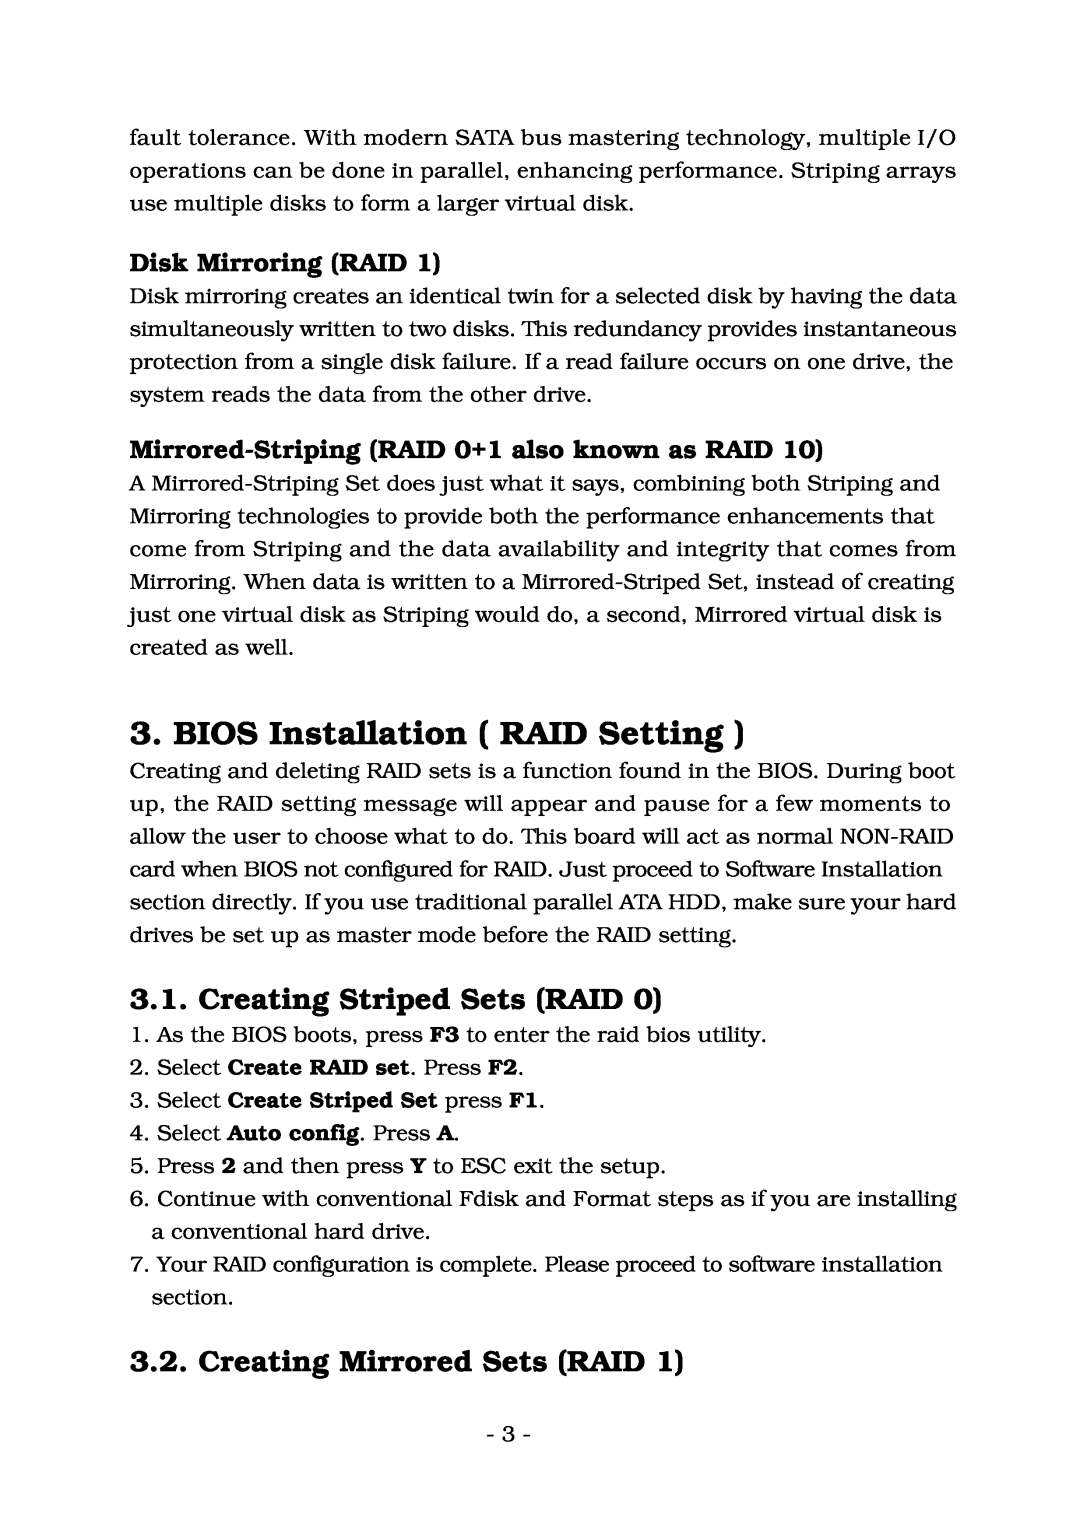 Lindy ATA-133 BIOS Installation RAID Setting, Creating Striped Sets RAID, Creating Mirrored Sets RAID, Disk Mirroring RAID 